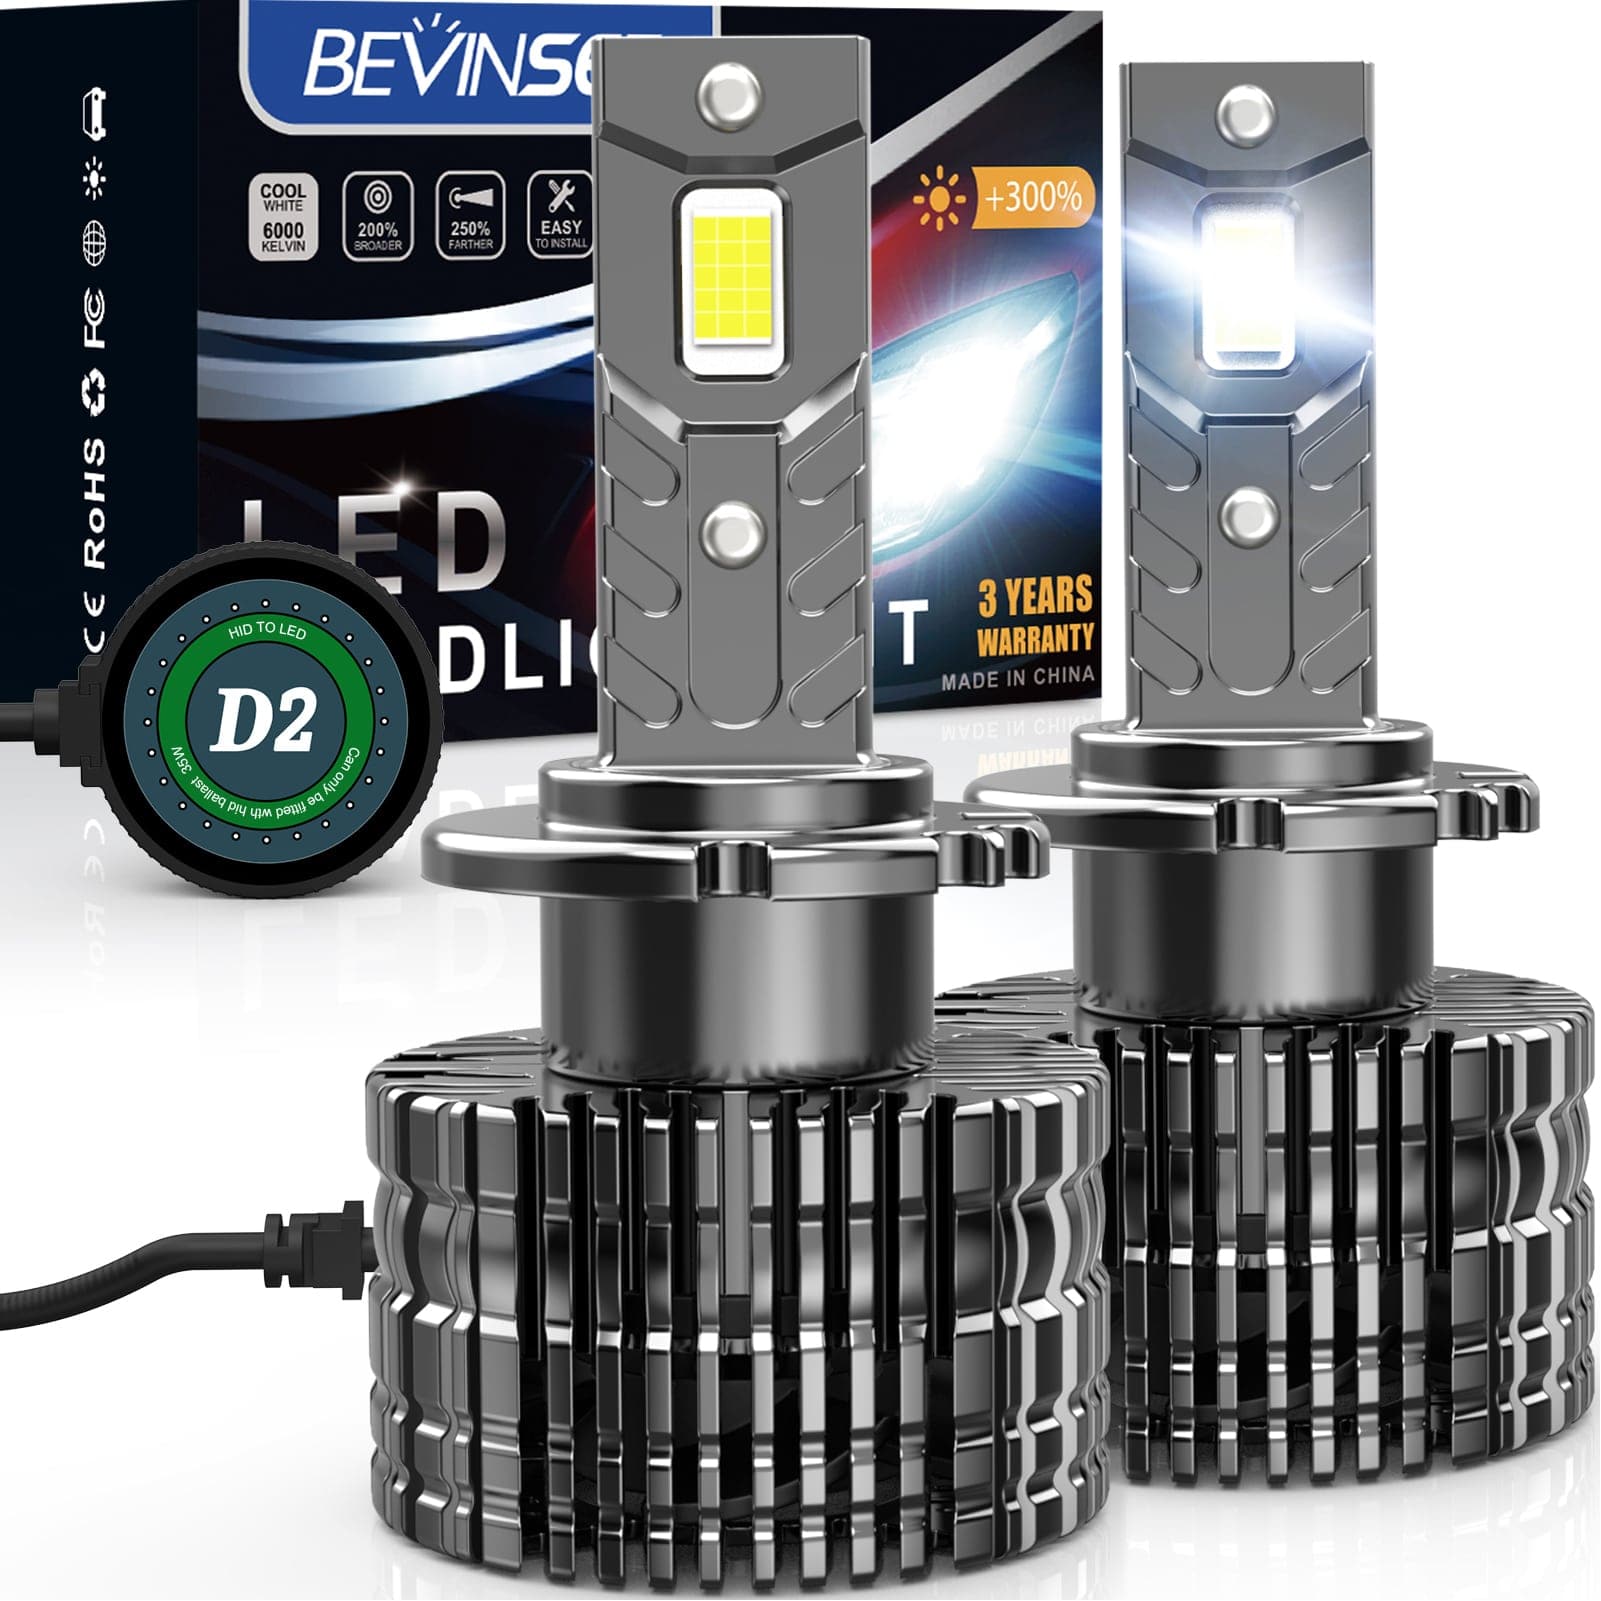 BEVINSEE D2S/D2R LED Headlight Bulbs 7000LM/pair 6000K For Hid Xenon